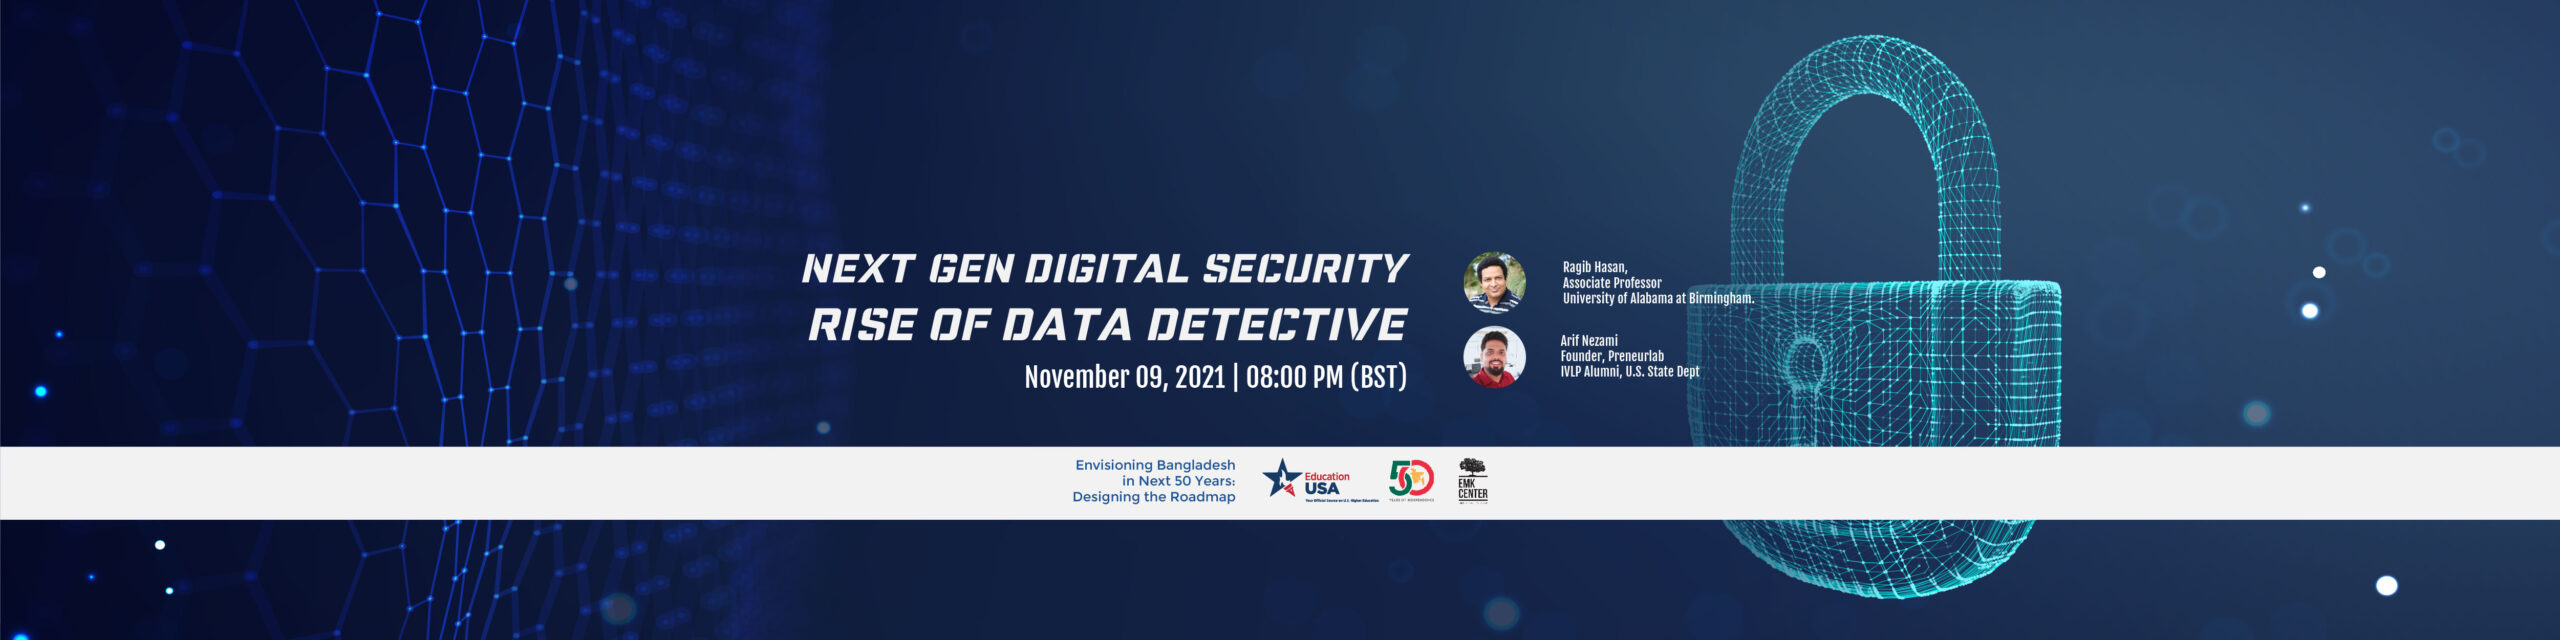 Next-Gen Digital Security: Rise of Data Detective